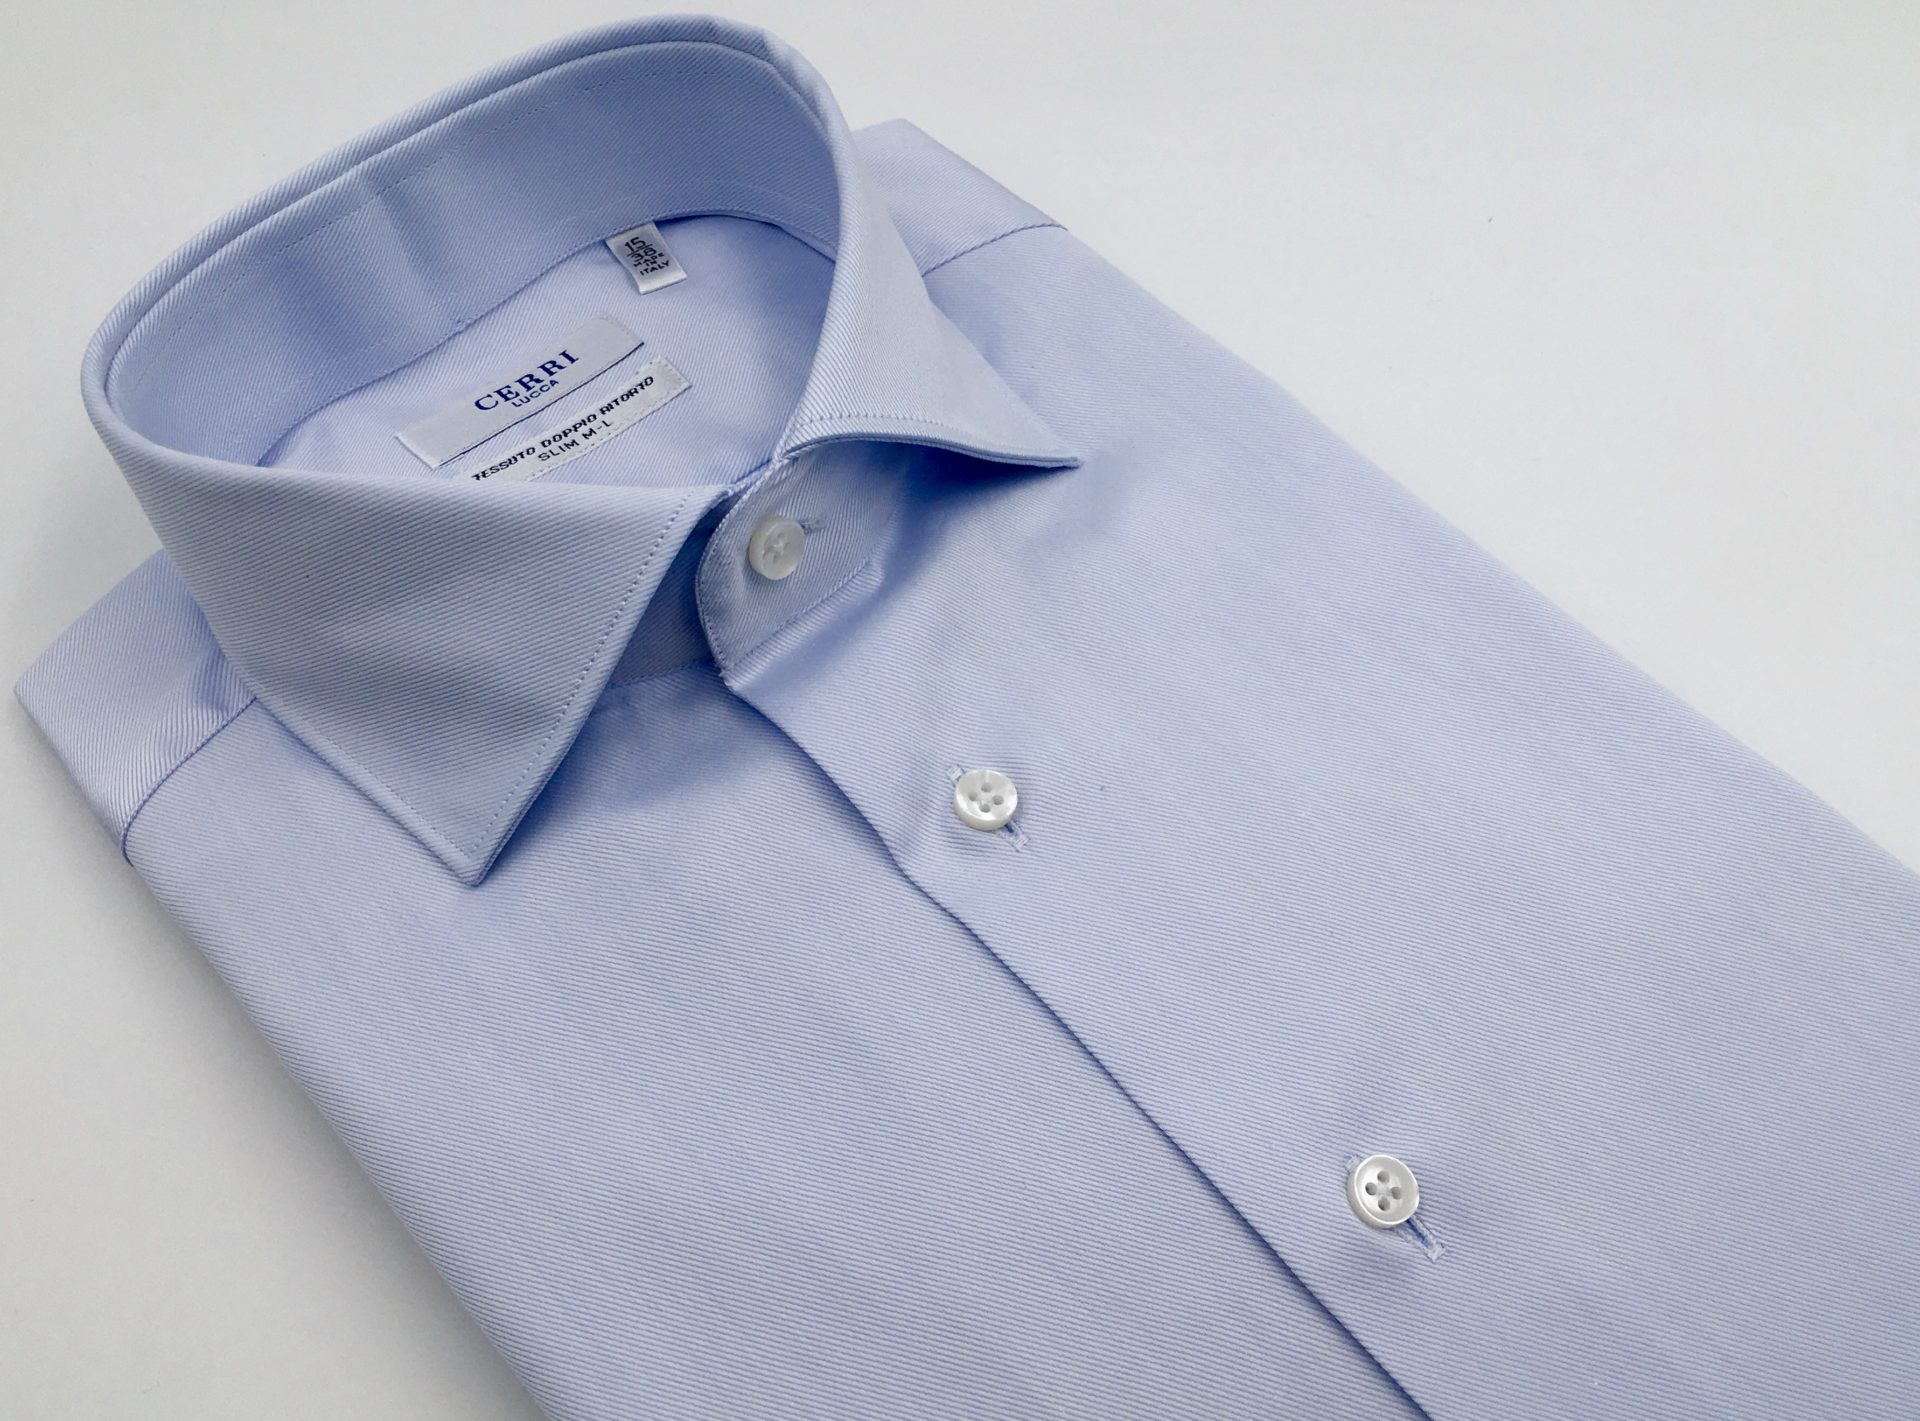 light blue shirt two ply twill fabric - Cerri Camiceria